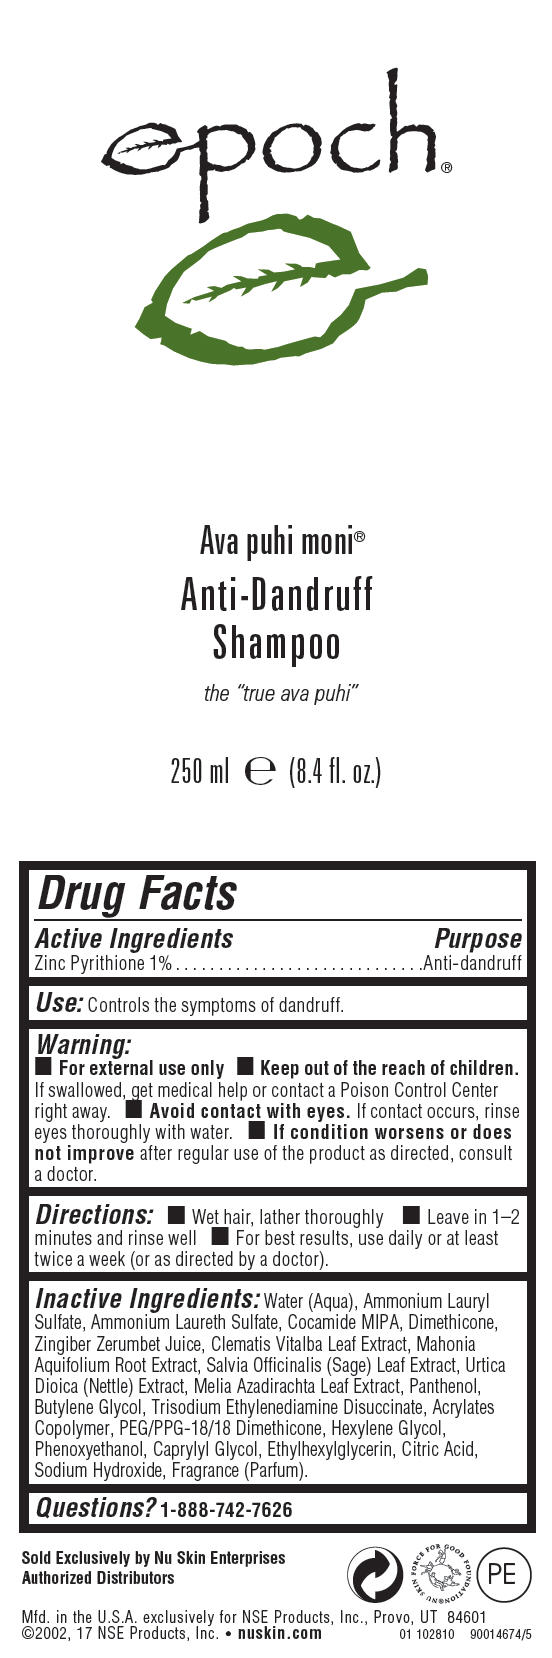 Epoch Ava Puhi Moni Anti-dandruff | Pyrithione Zinc Shampoo while Breastfeeding